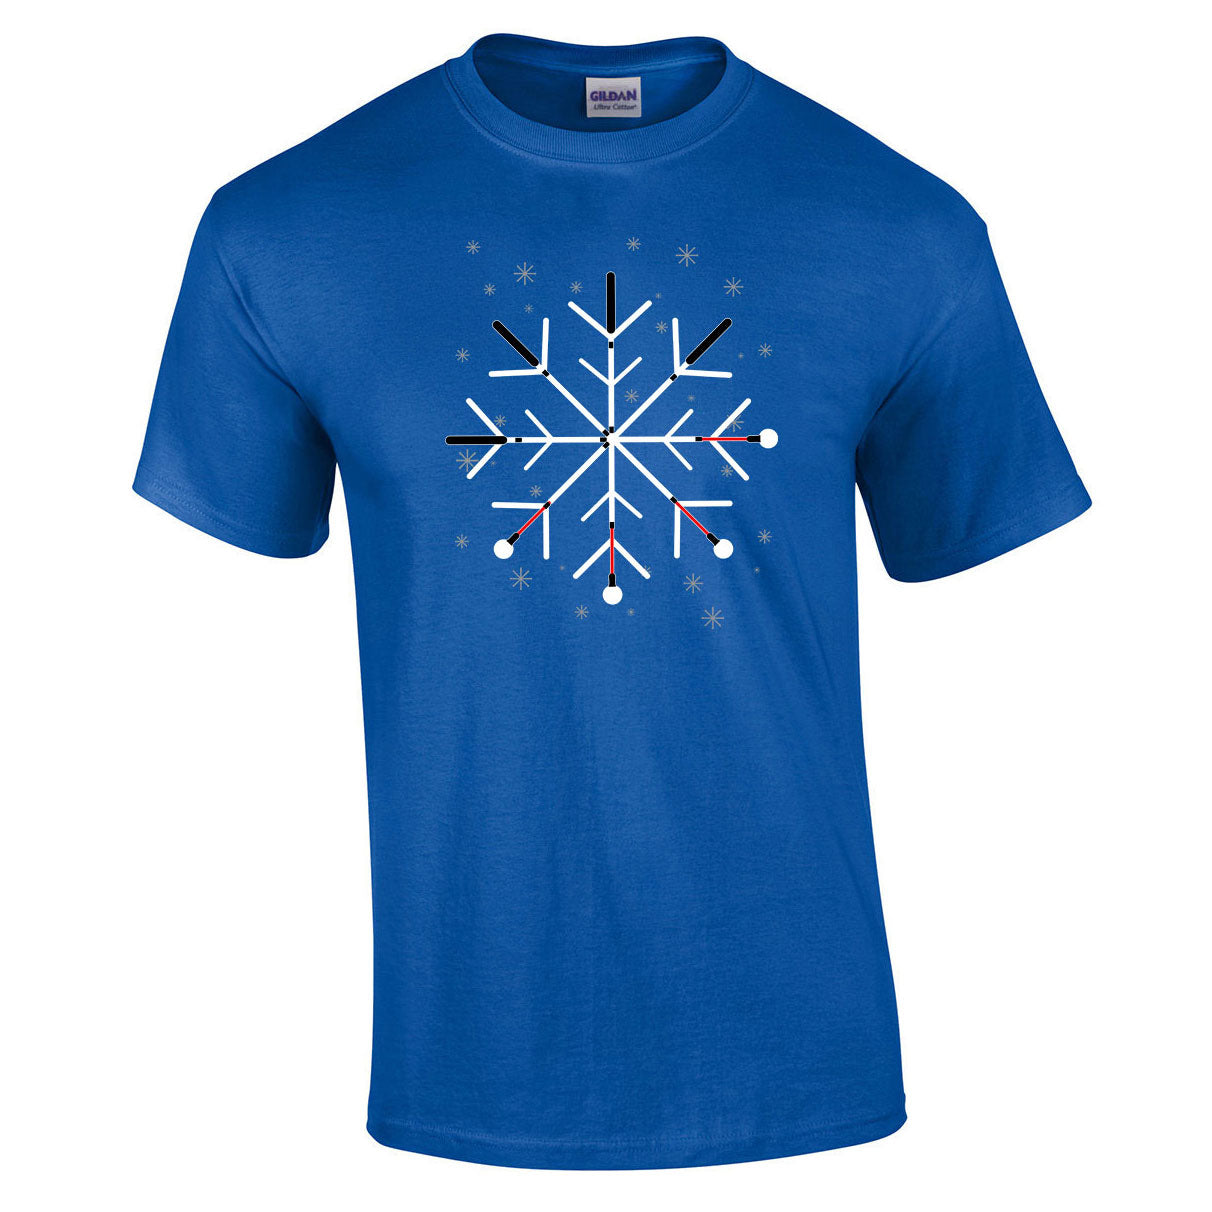 SnowFlake Cane T-Shirt - Royal Blue